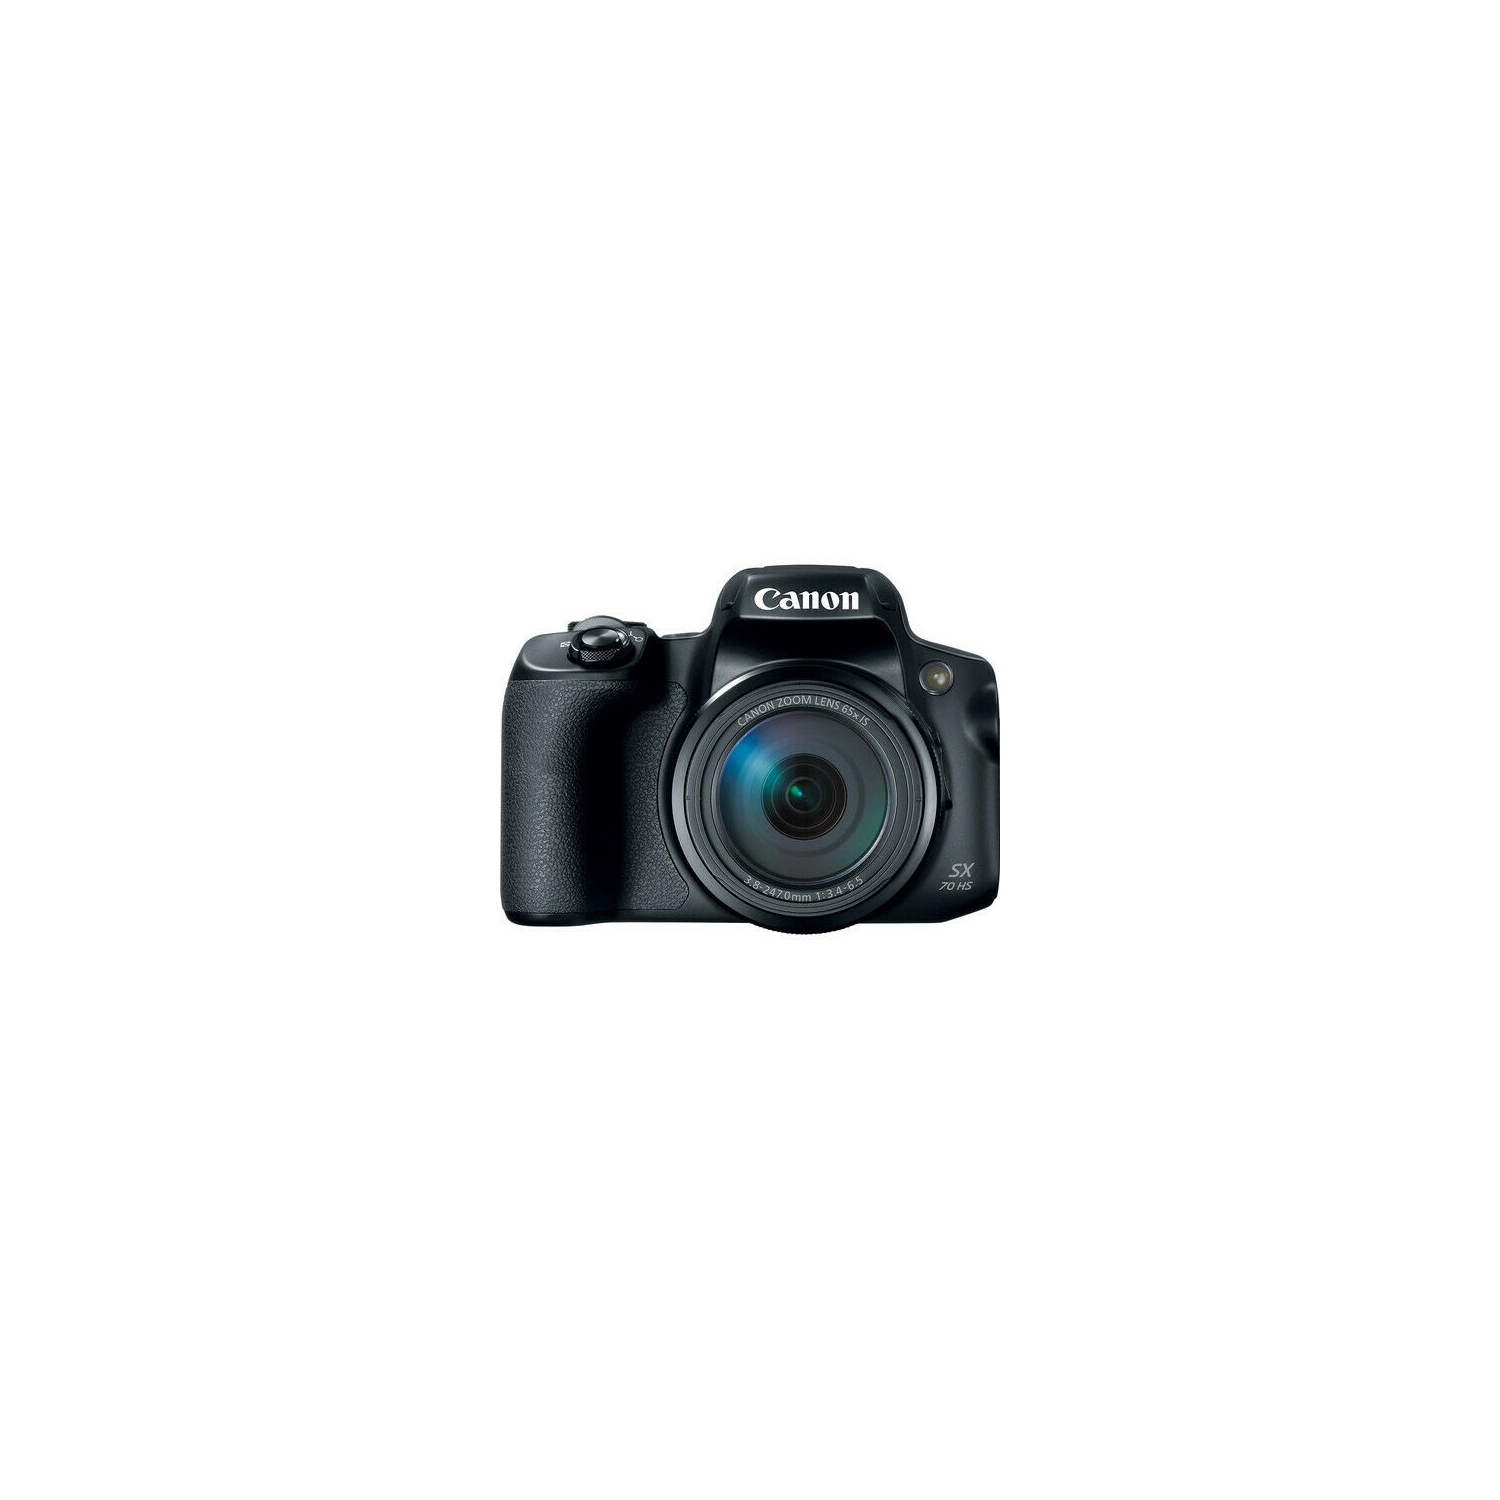 Canon PowerShot SX70 HS Shockproof Wi-Fi 20.3MP 65x Optical Zoom Digital Camera - Black - Open Box